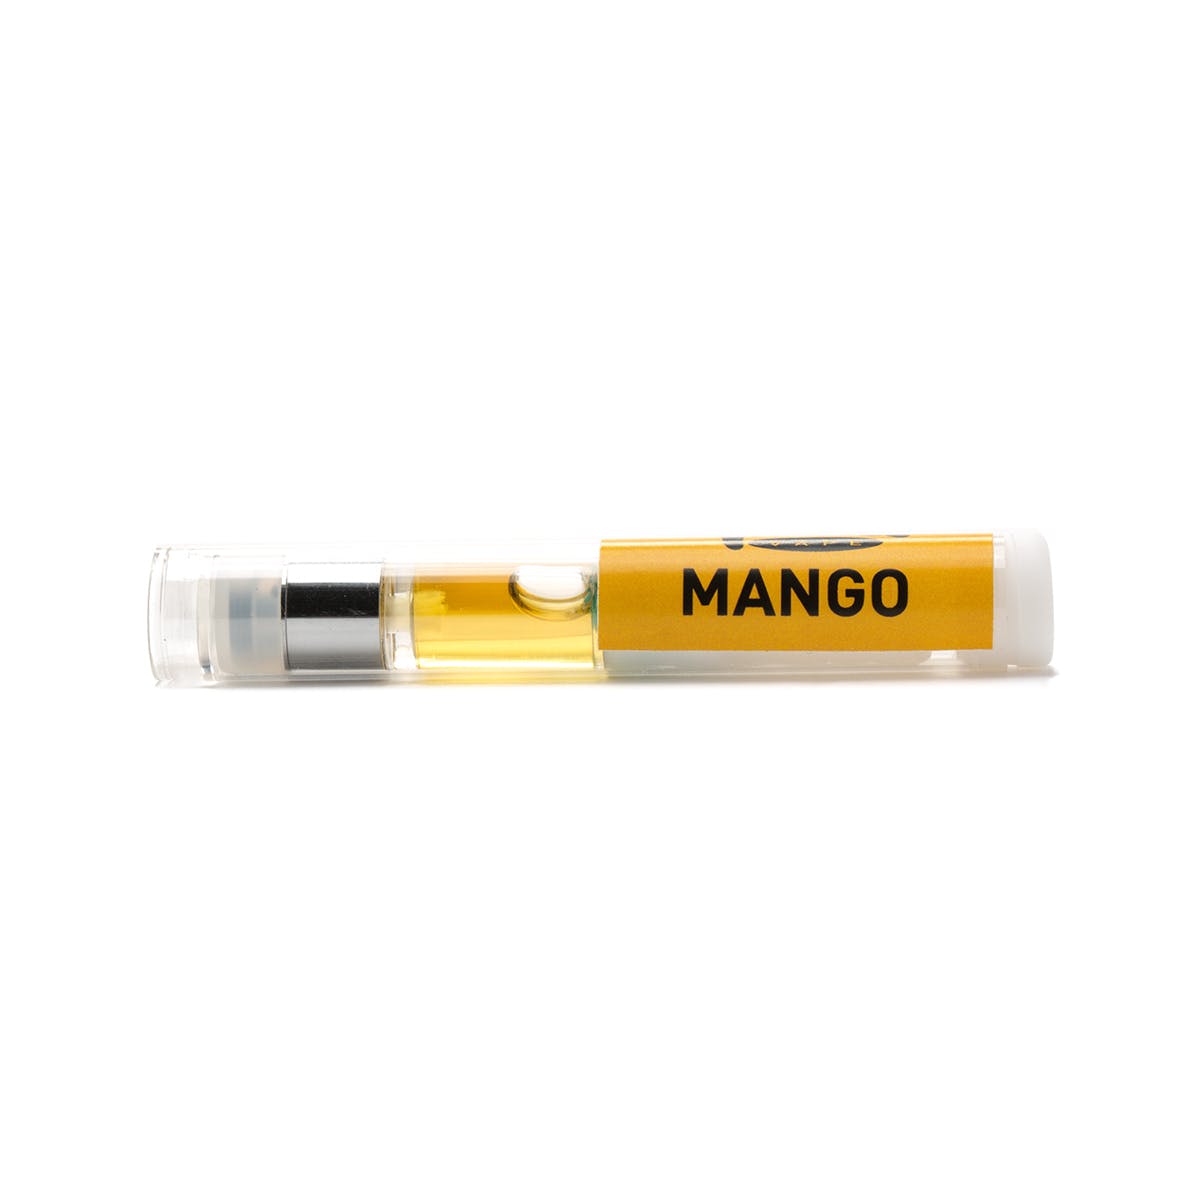 Mango Tasteee Cartridge